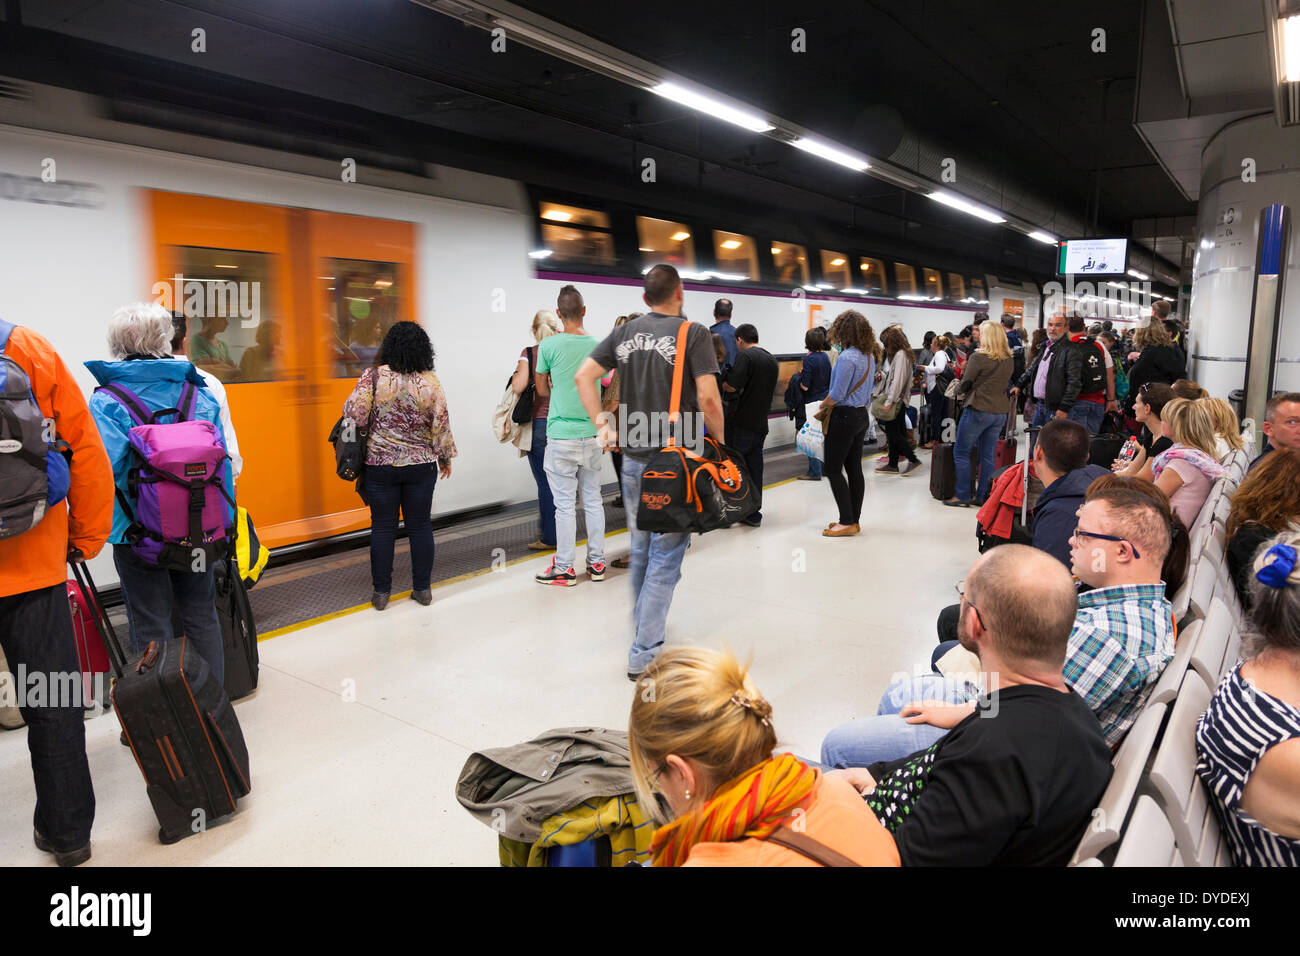 Passengers waiting on railway platform to board arriving train. Stock Photo